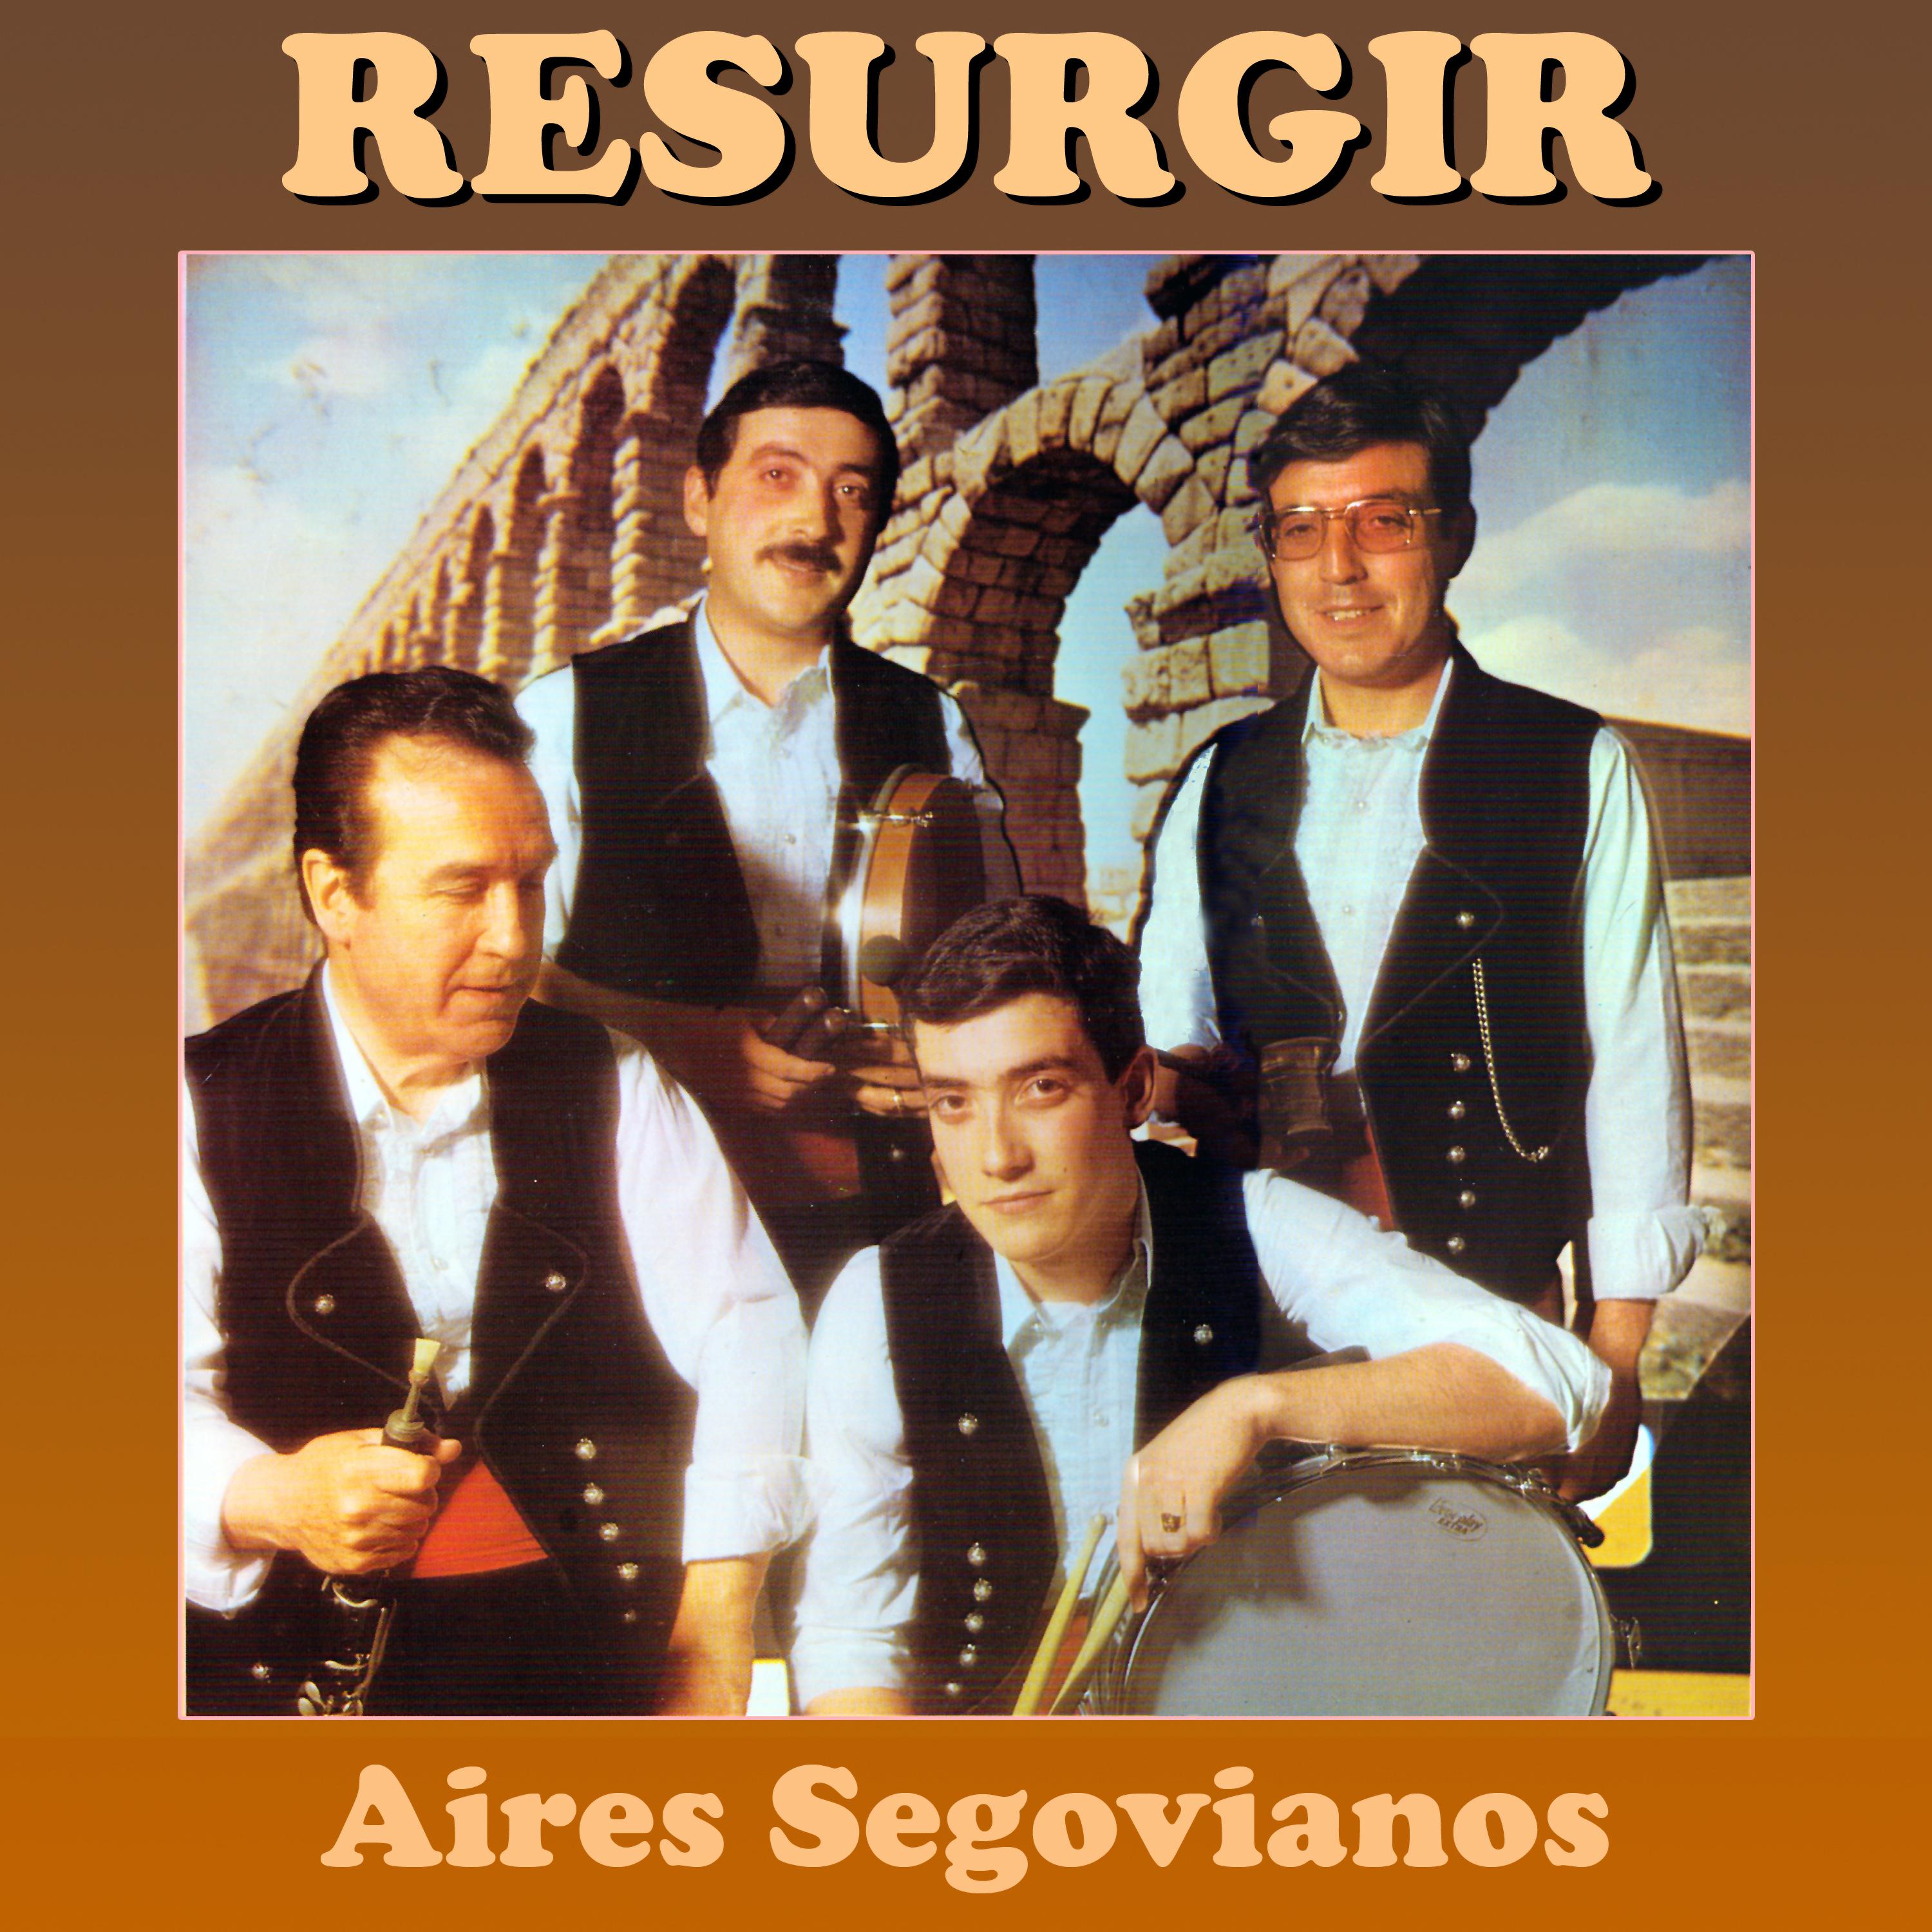 Aires Segovianos